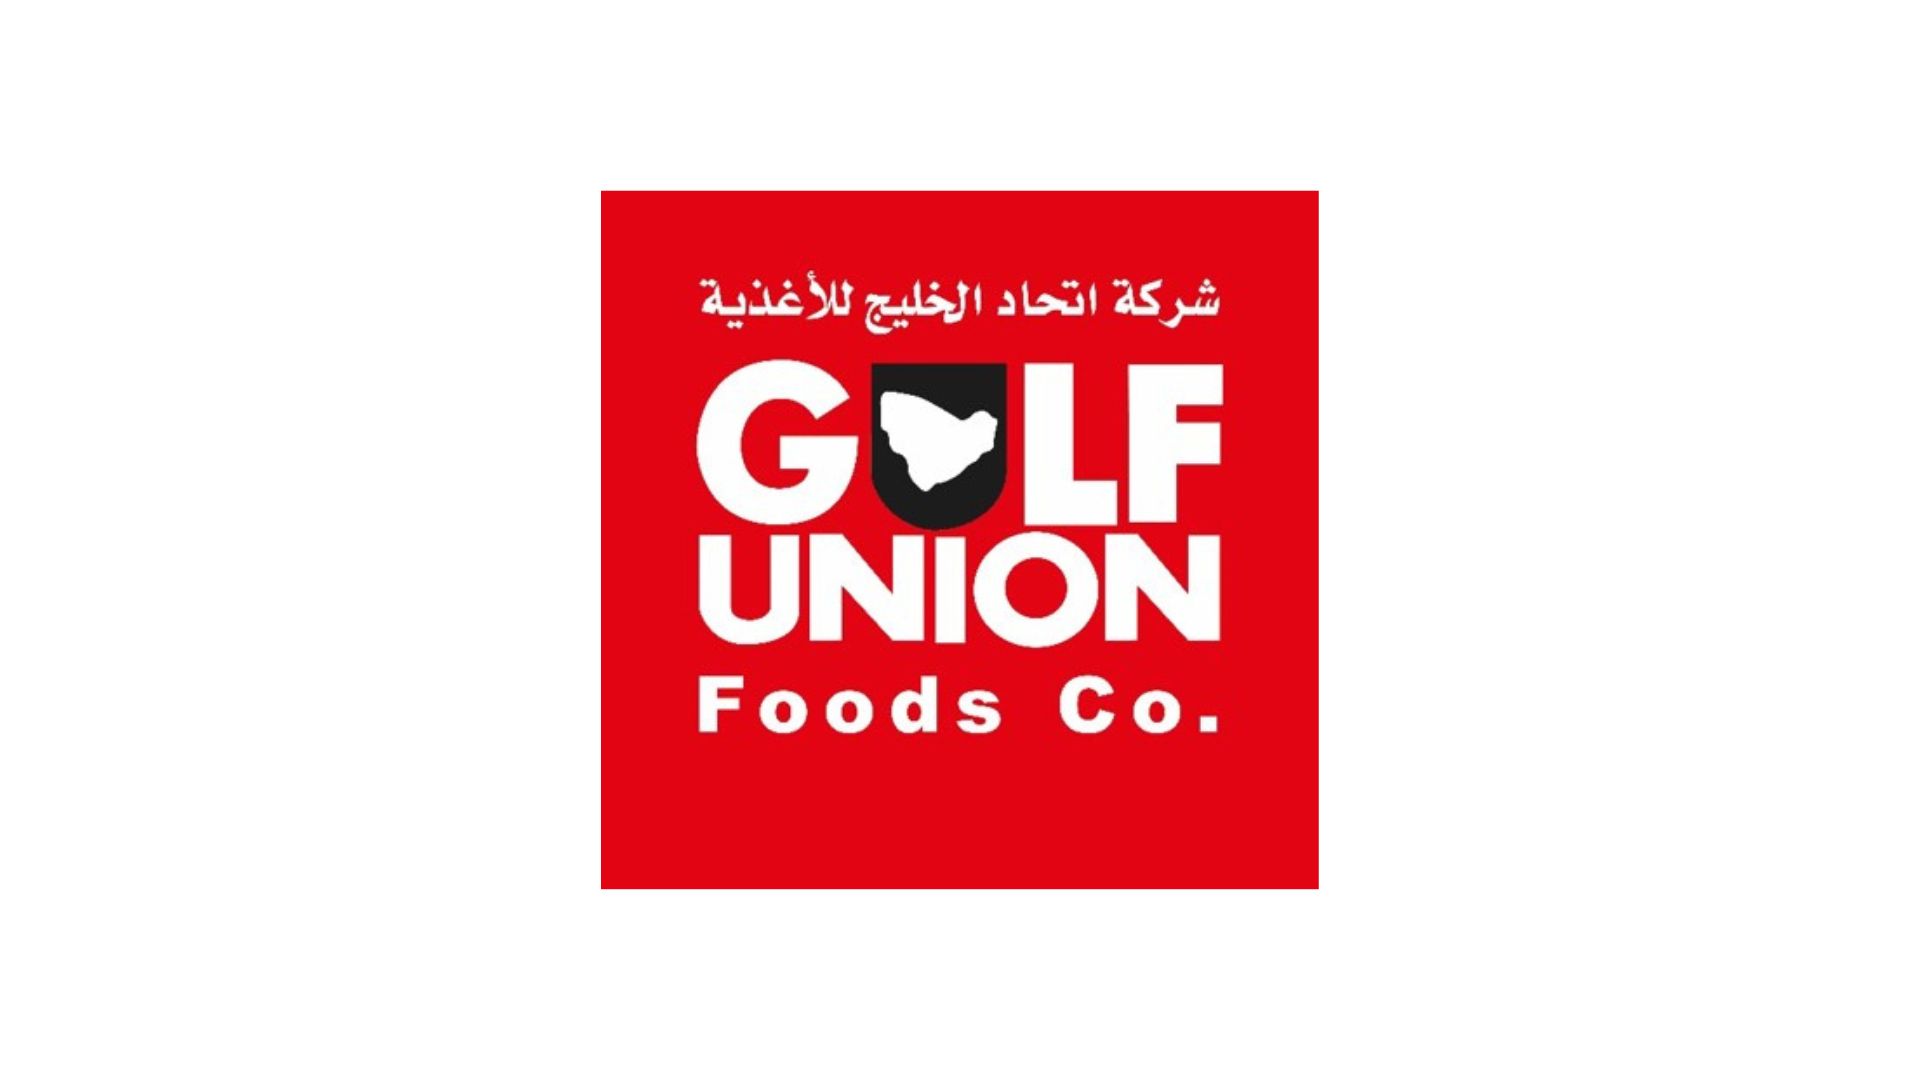 Gulf Union Foods Co.